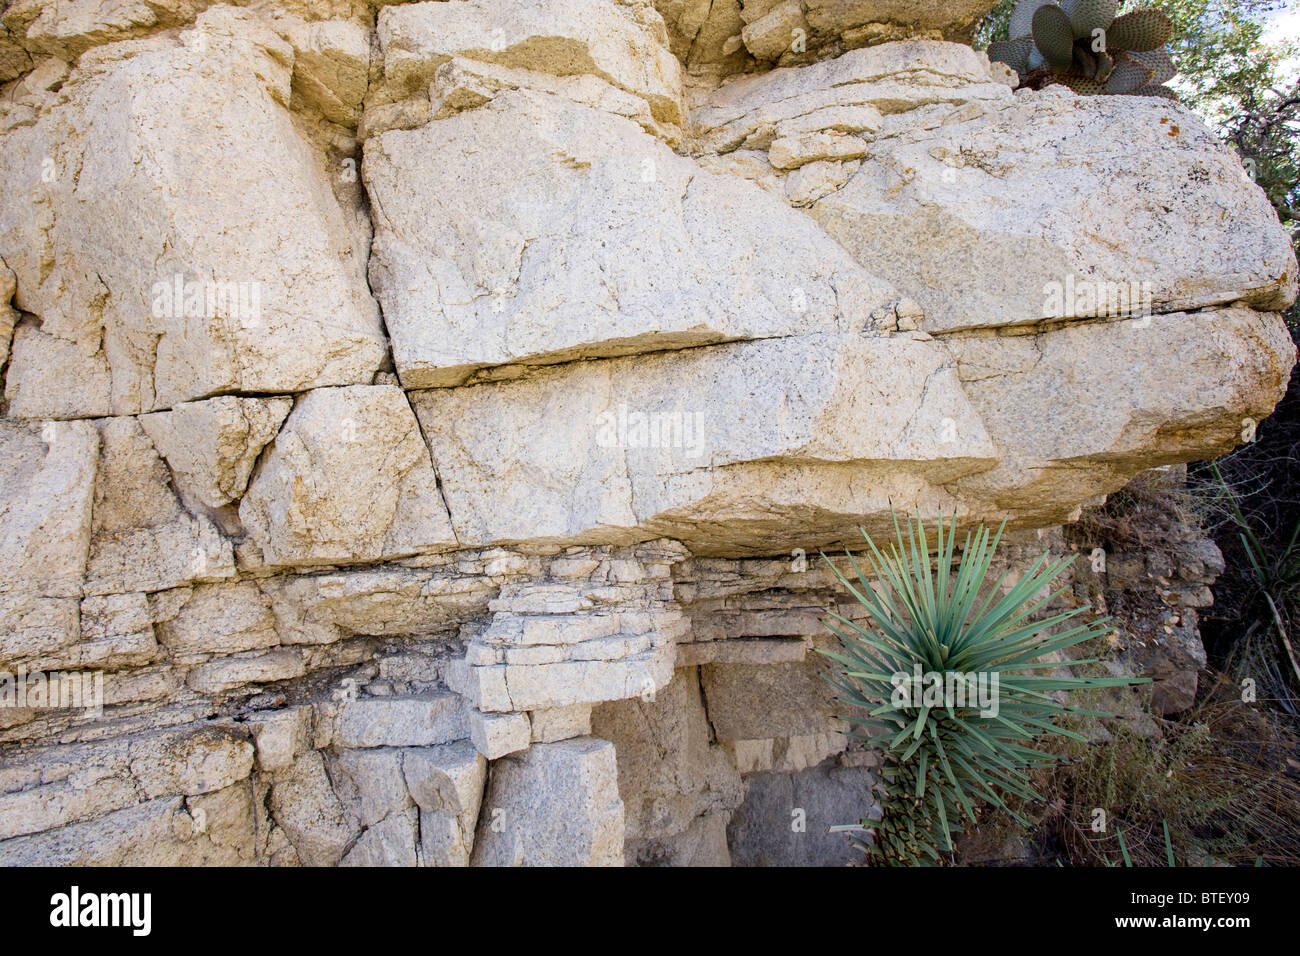 Monzogranite rock showing its layers - California USA Stock Photo